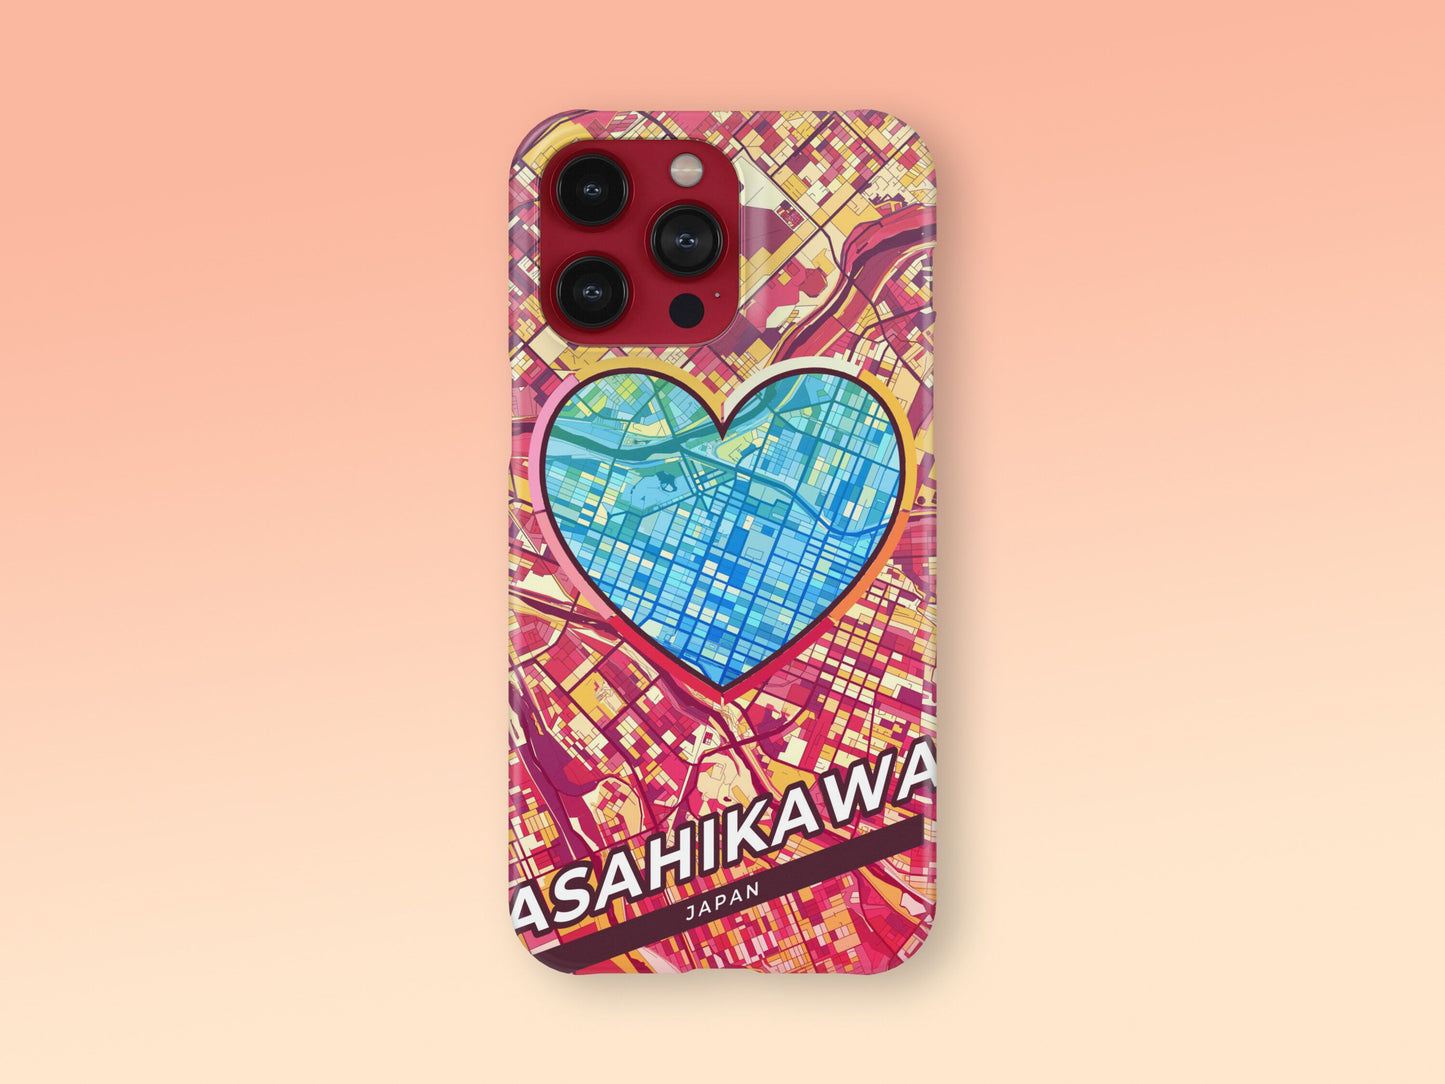 Asahikawa Japan slim phone case with colorful icon. Birthday, wedding or housewarming gift. Couple match cases. 2